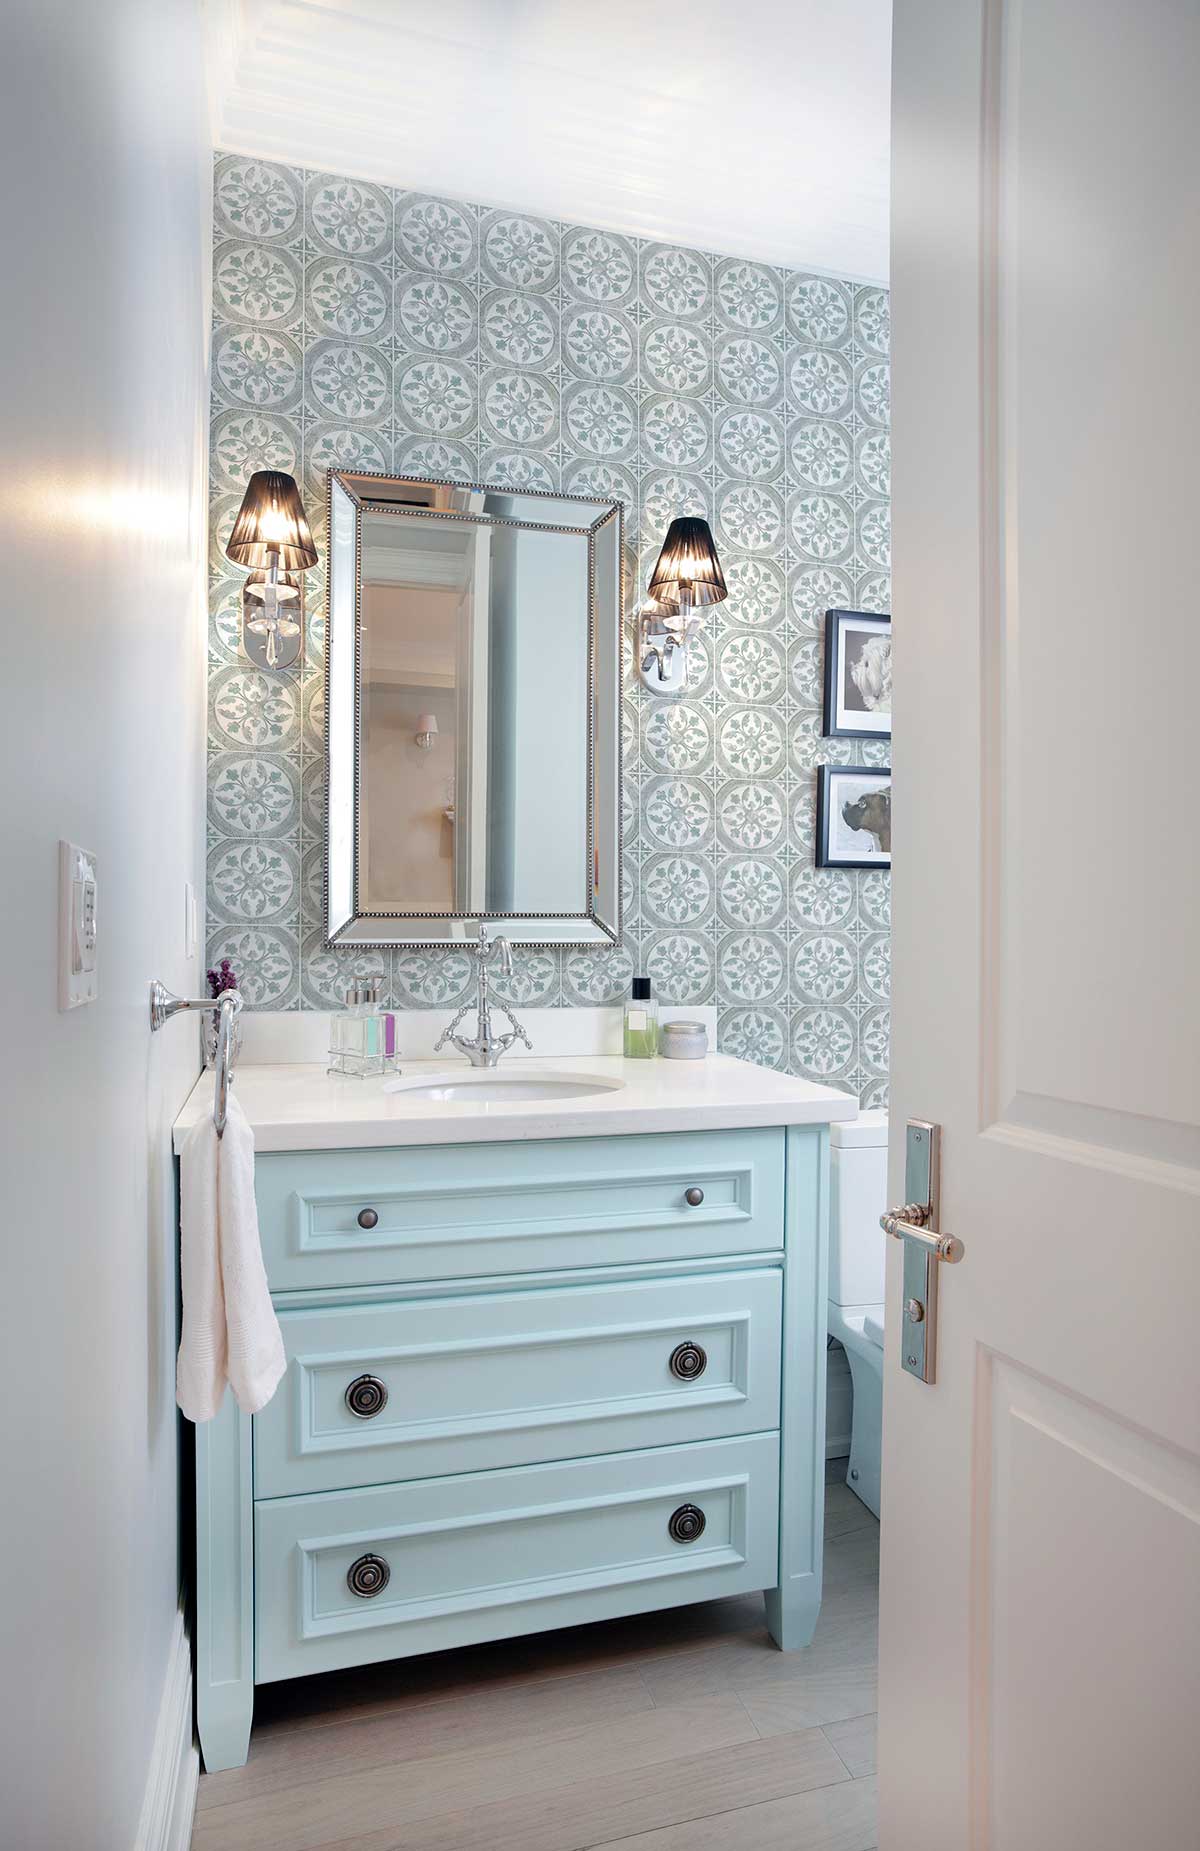 Clover Green AST Bathroom Decorative Tile